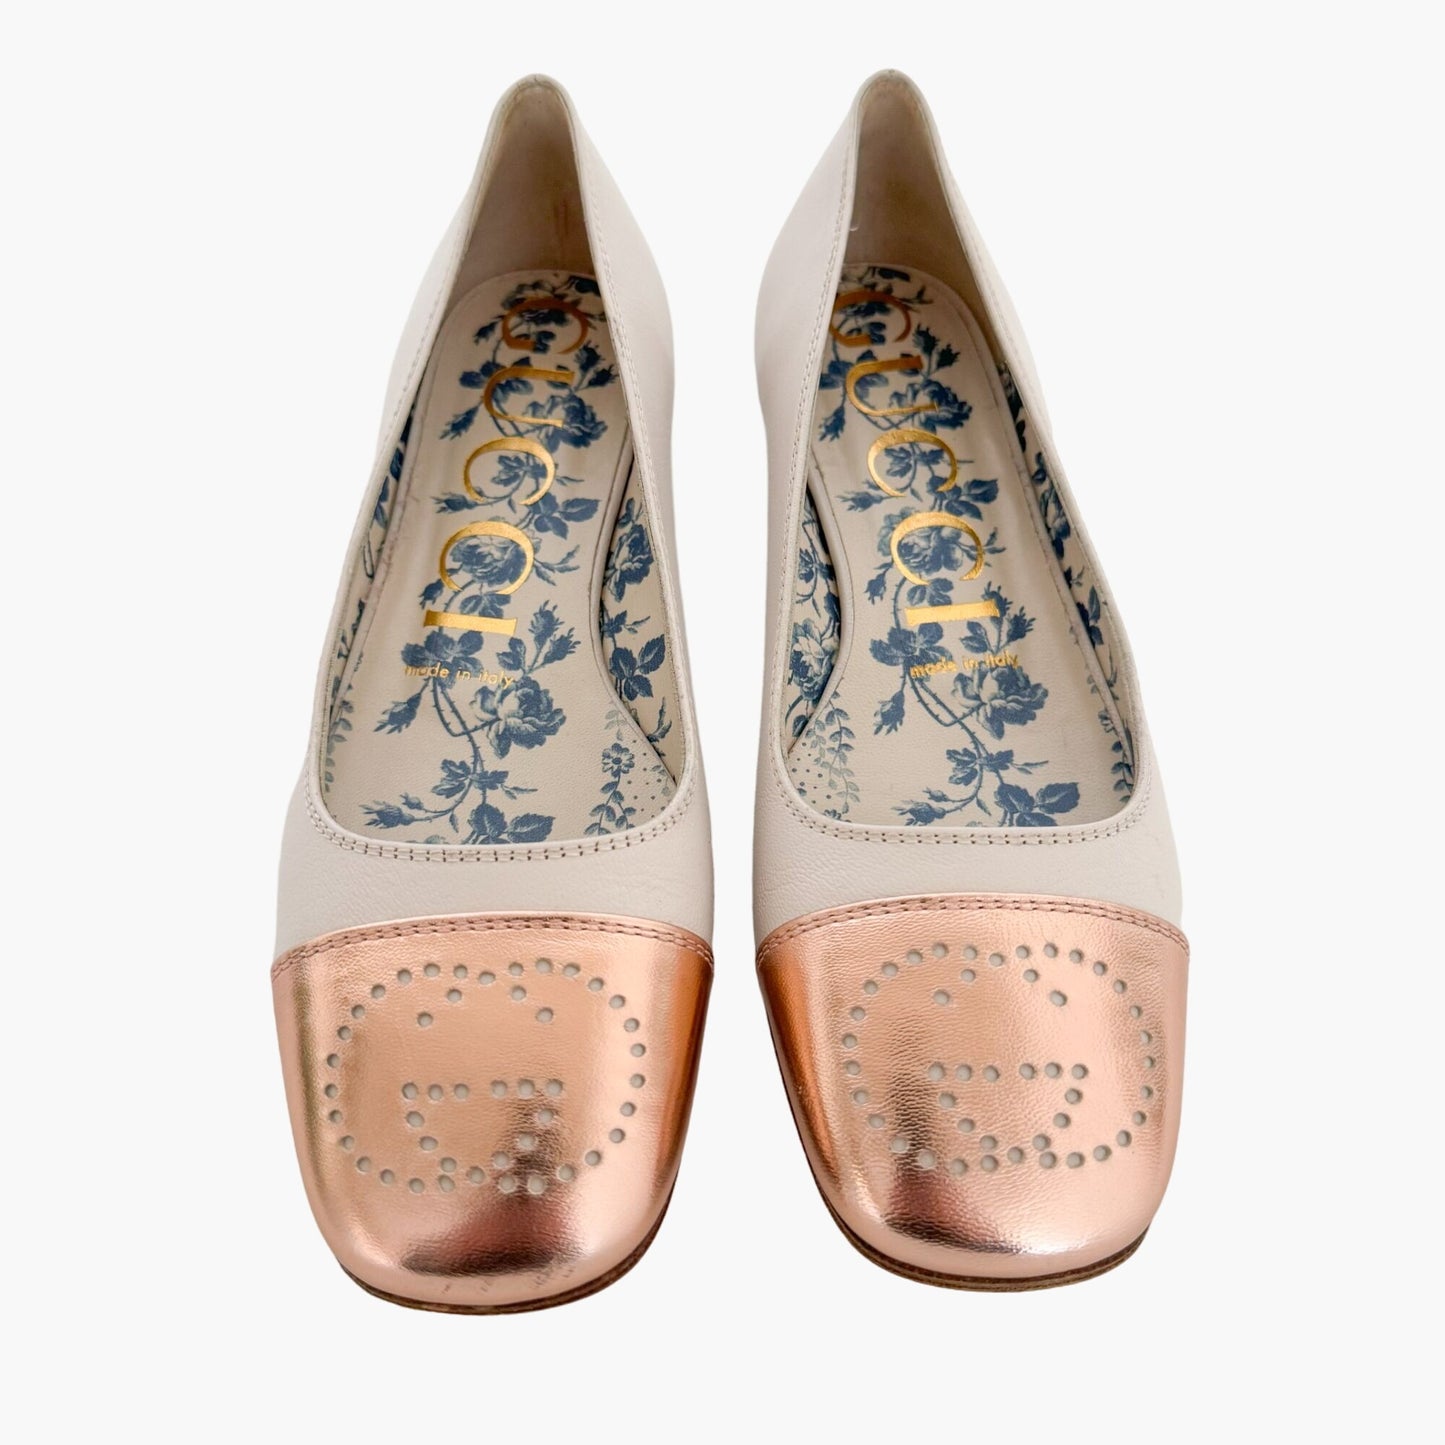 Gucci Hills GG Cap Toe Ballet Flat in Ivory & Metallic Pink Size 36.5